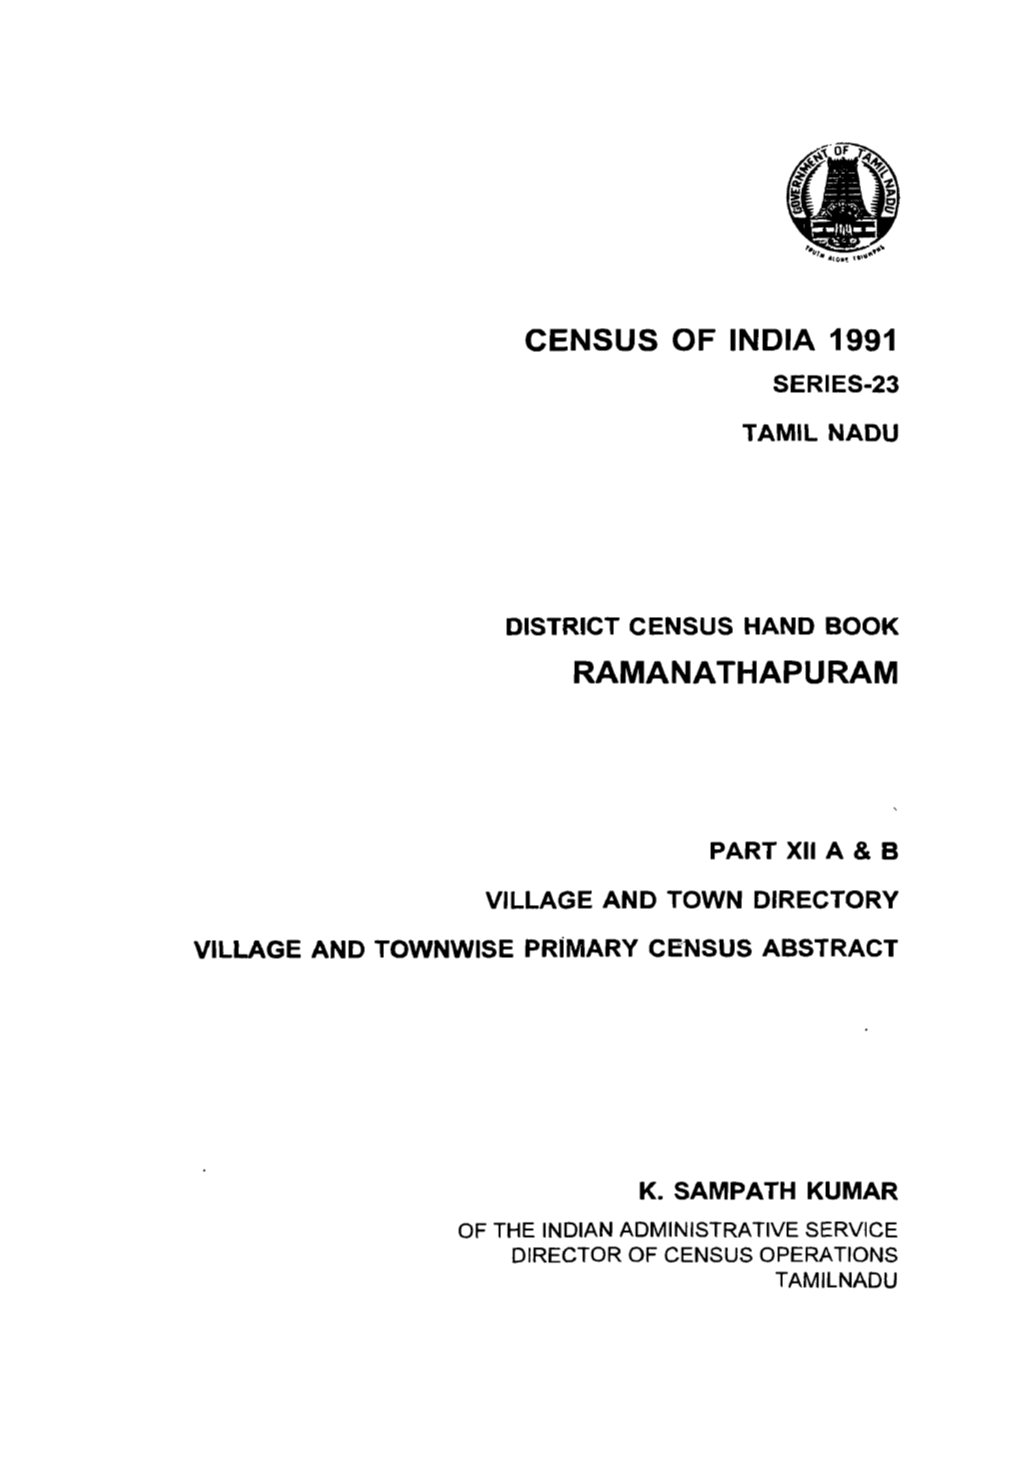 District Census Handbook, Ramanathapuram, Part XII-A & B